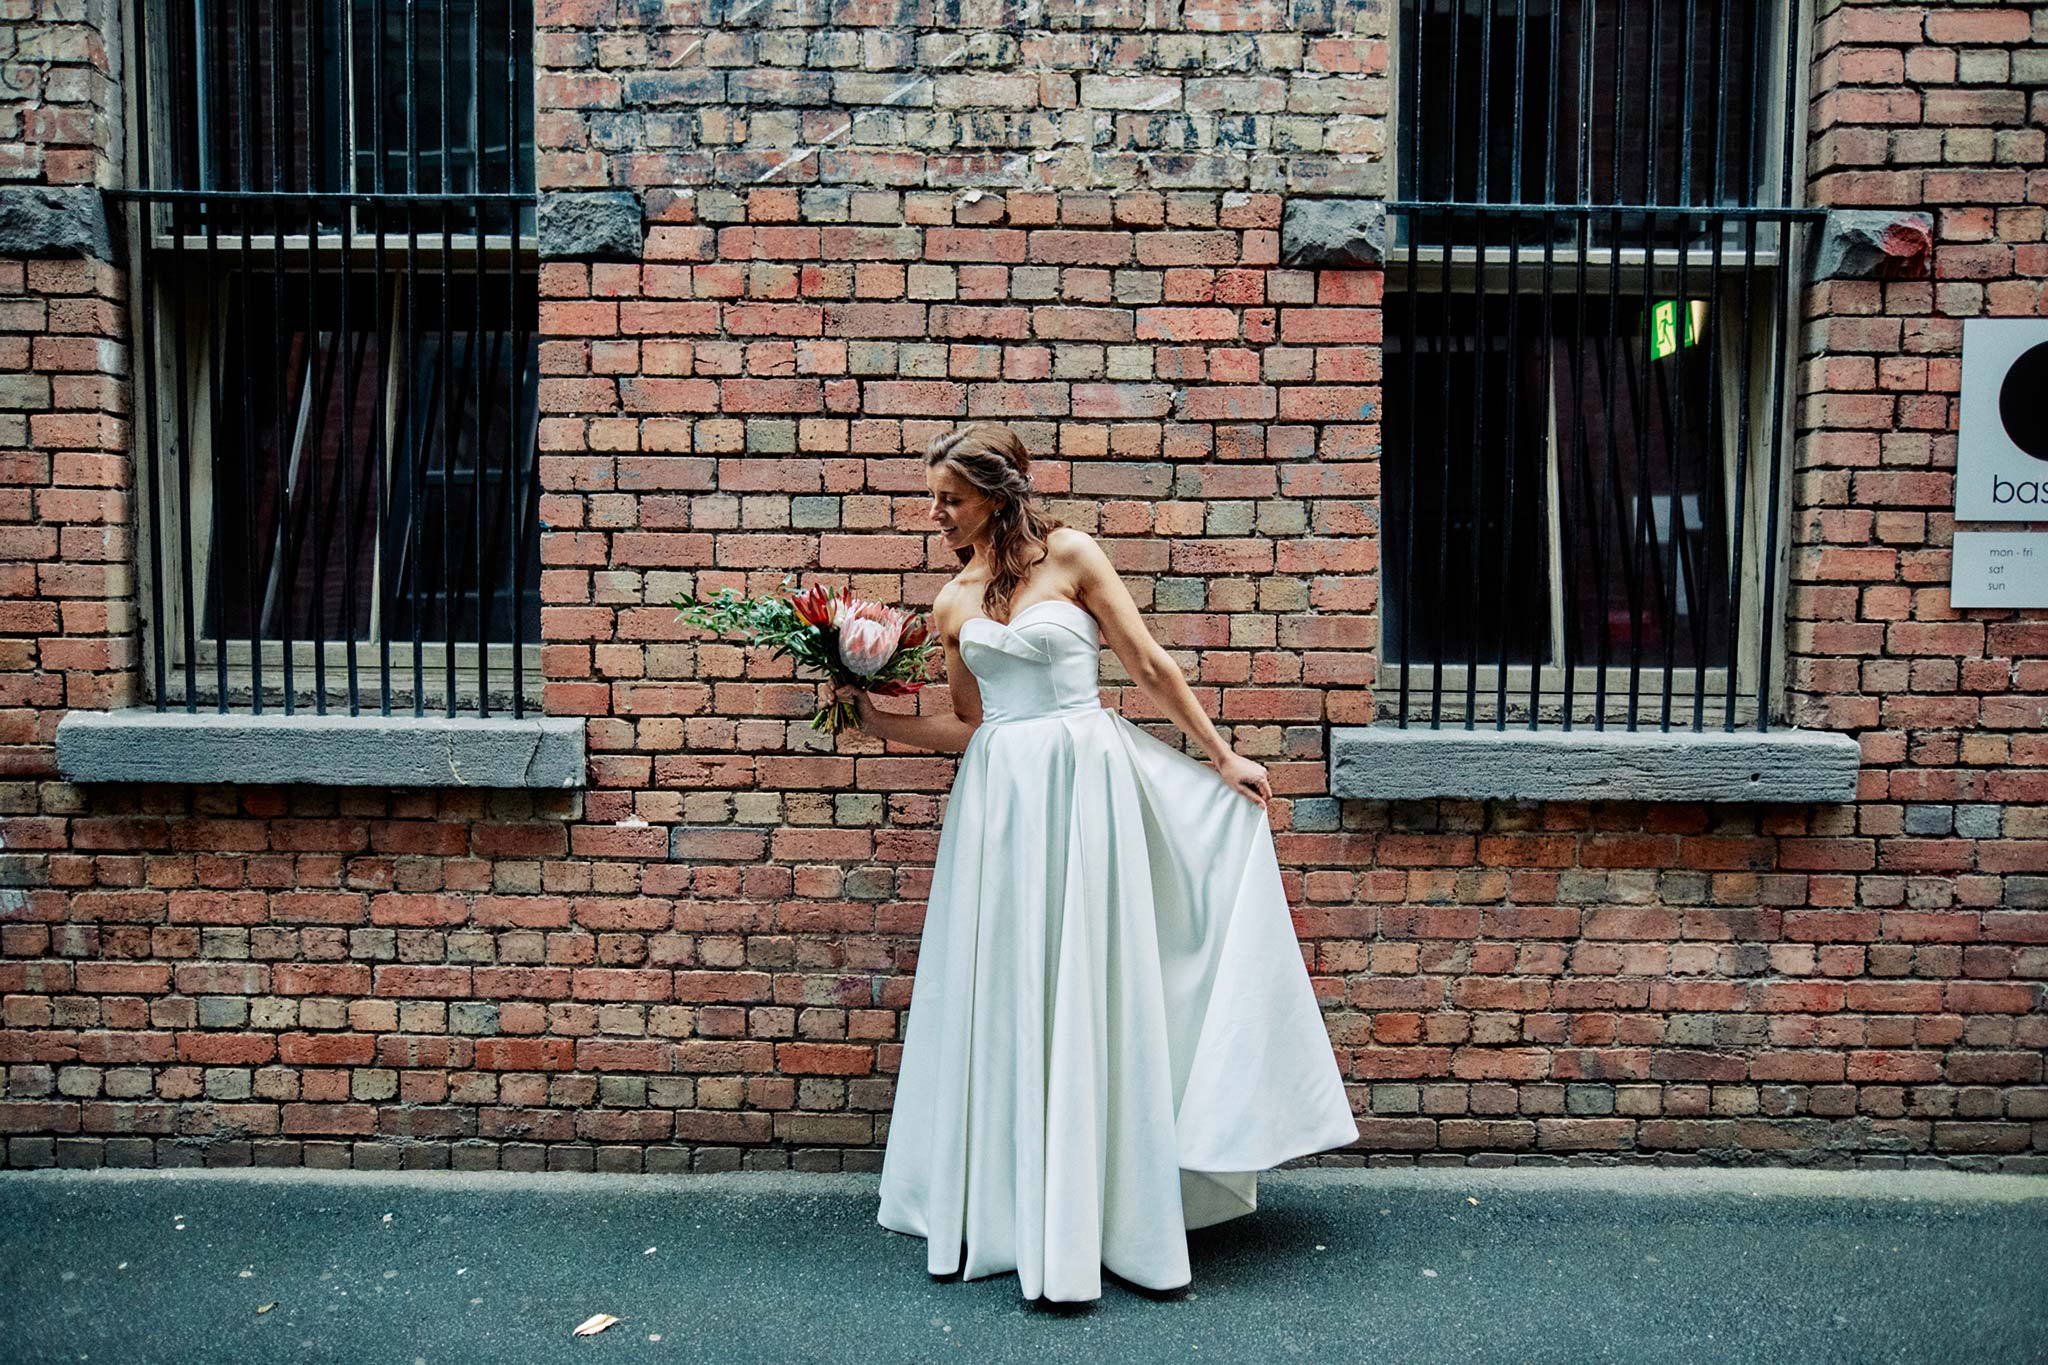 Melbourne Wedding Hardware Lane alley portrait bride holding bouquet in alleyway